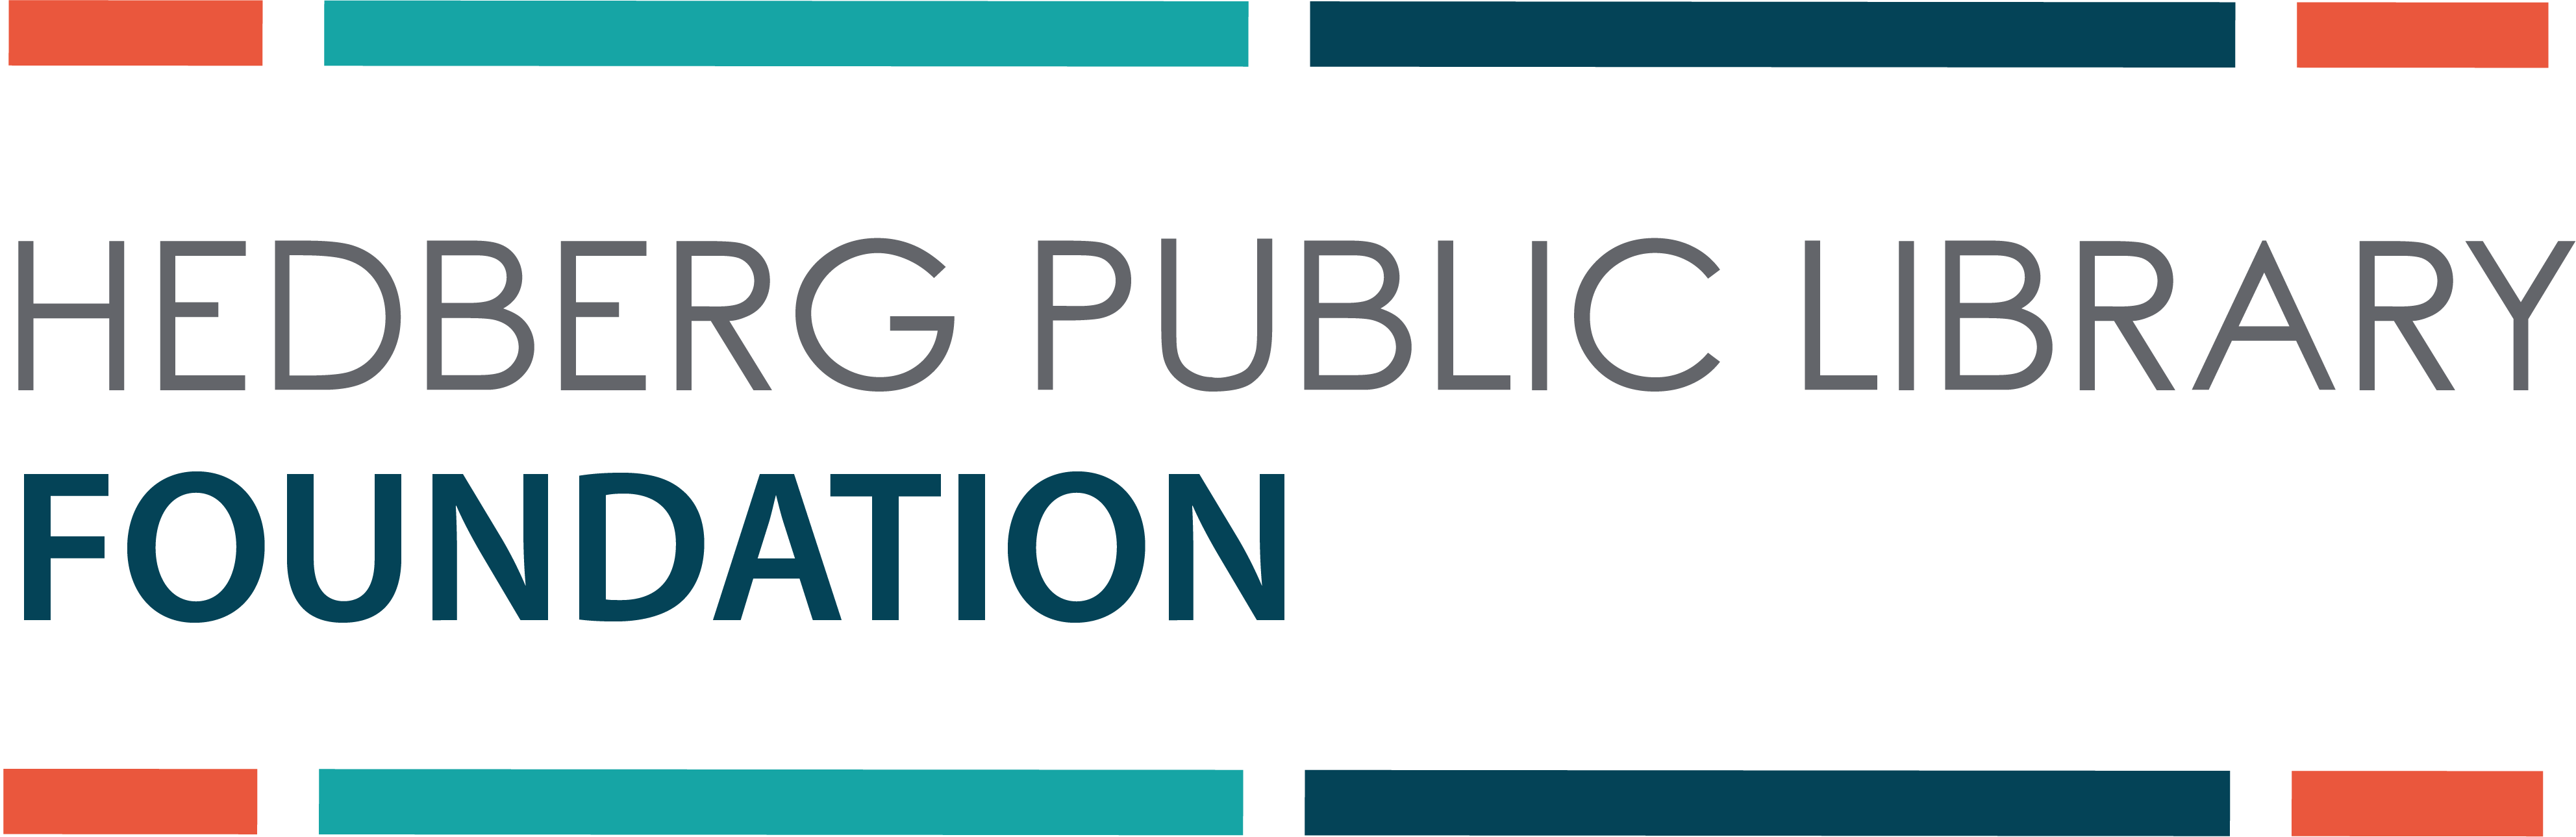 Hedberg Public Library Foundation logo